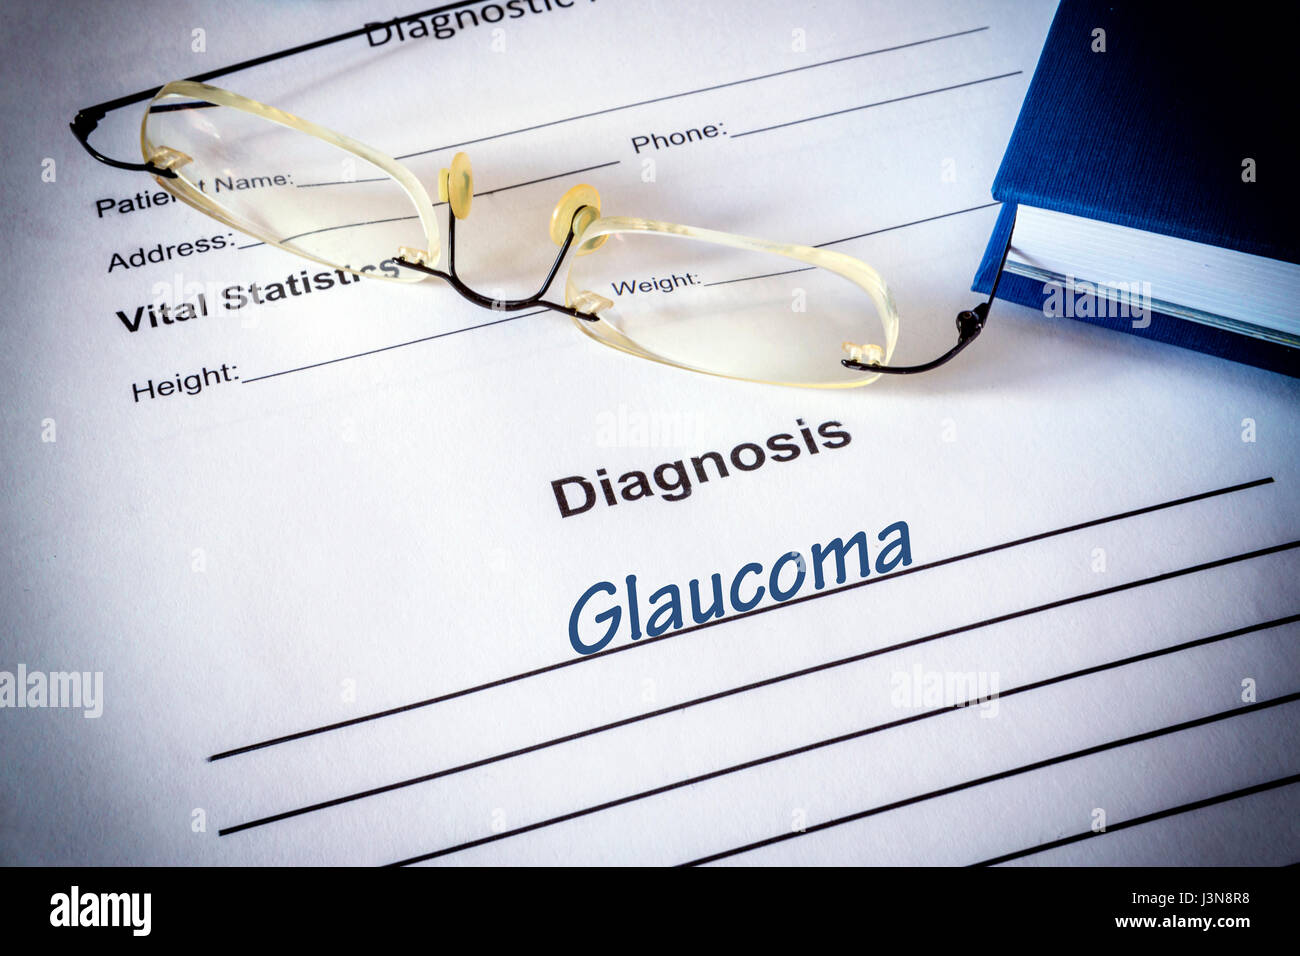 Lista con diagnóstico de glaucoma. Concepto de trastorno ocular. Foto de stock